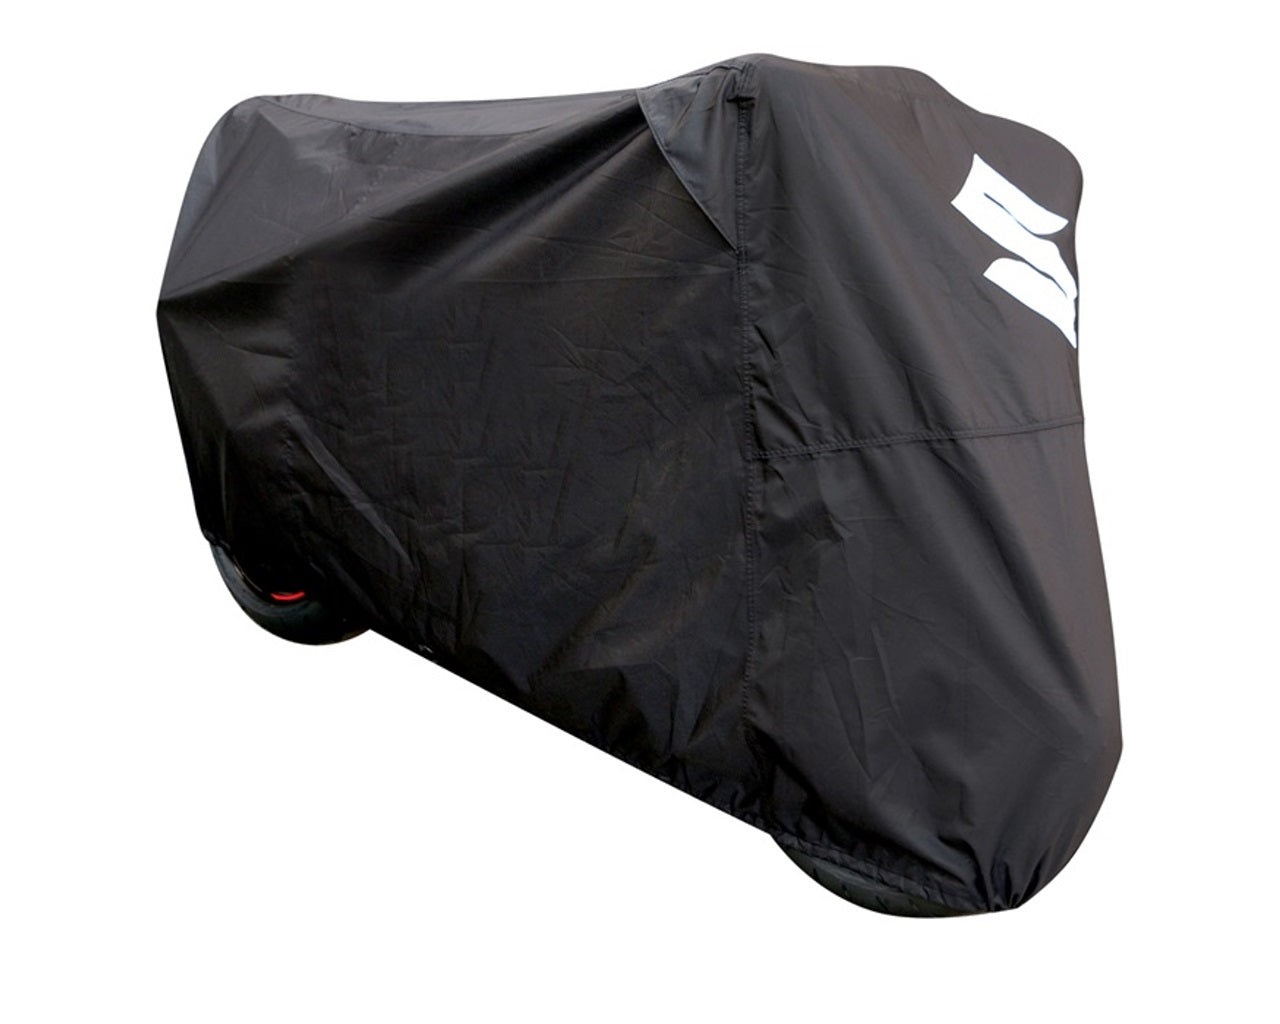 Suzuki Sportbike "S" Logo Waterproof Motorcycle Cover Black 990A0-66034